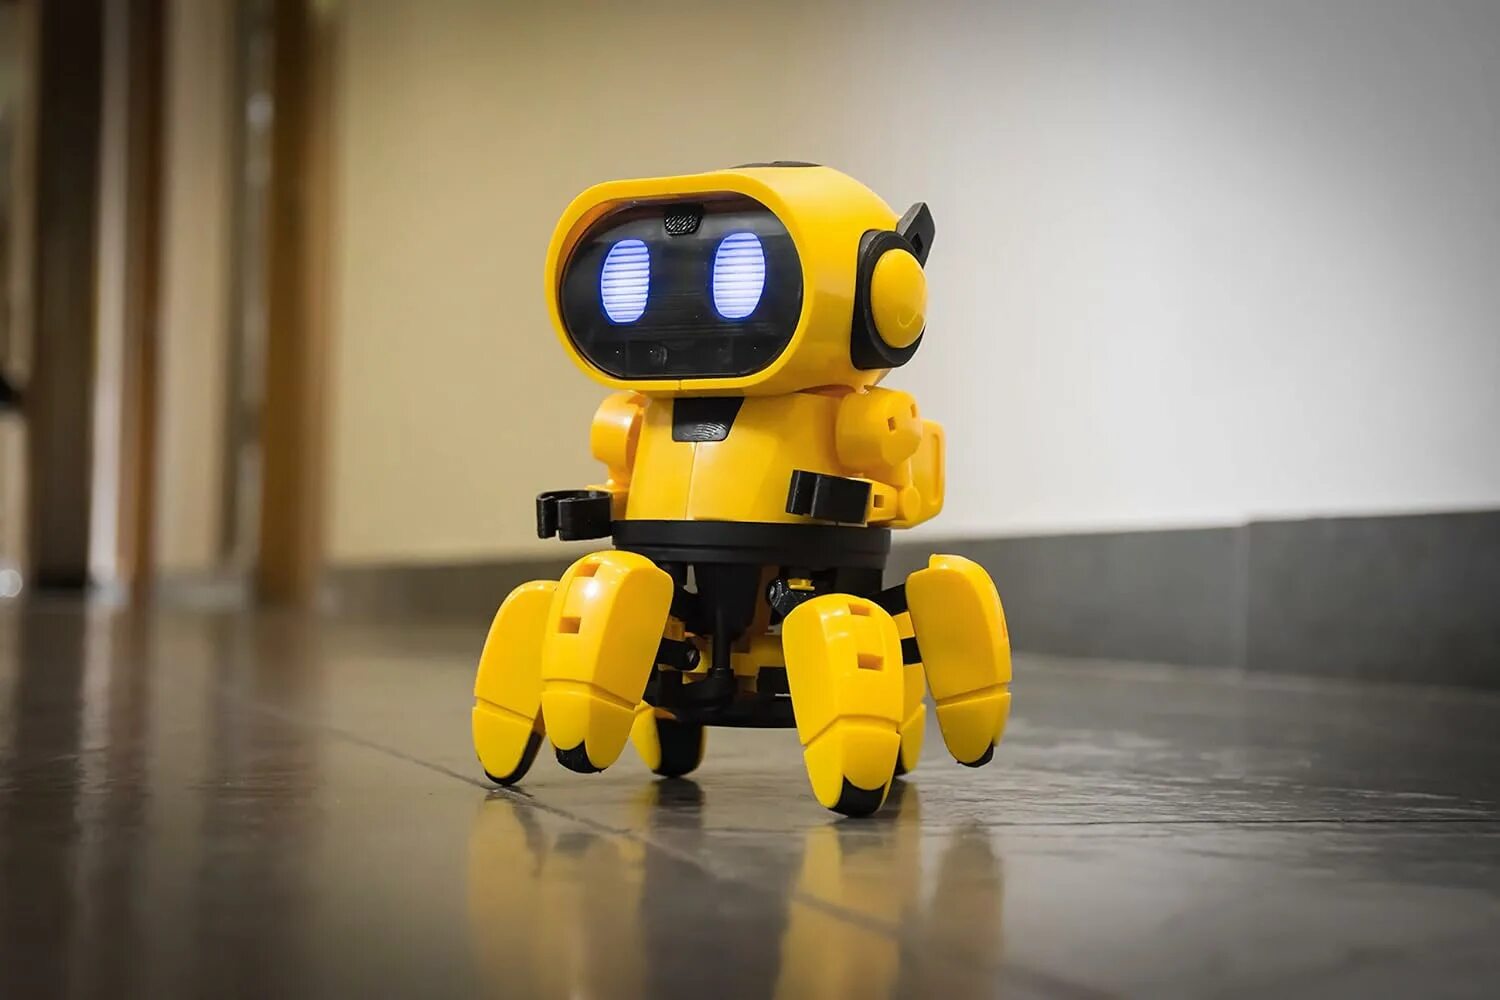 Тобби 2 робот. Желтый робот Тоби. Конструктор робототехника робот Железяка. Собака Тобби робот.